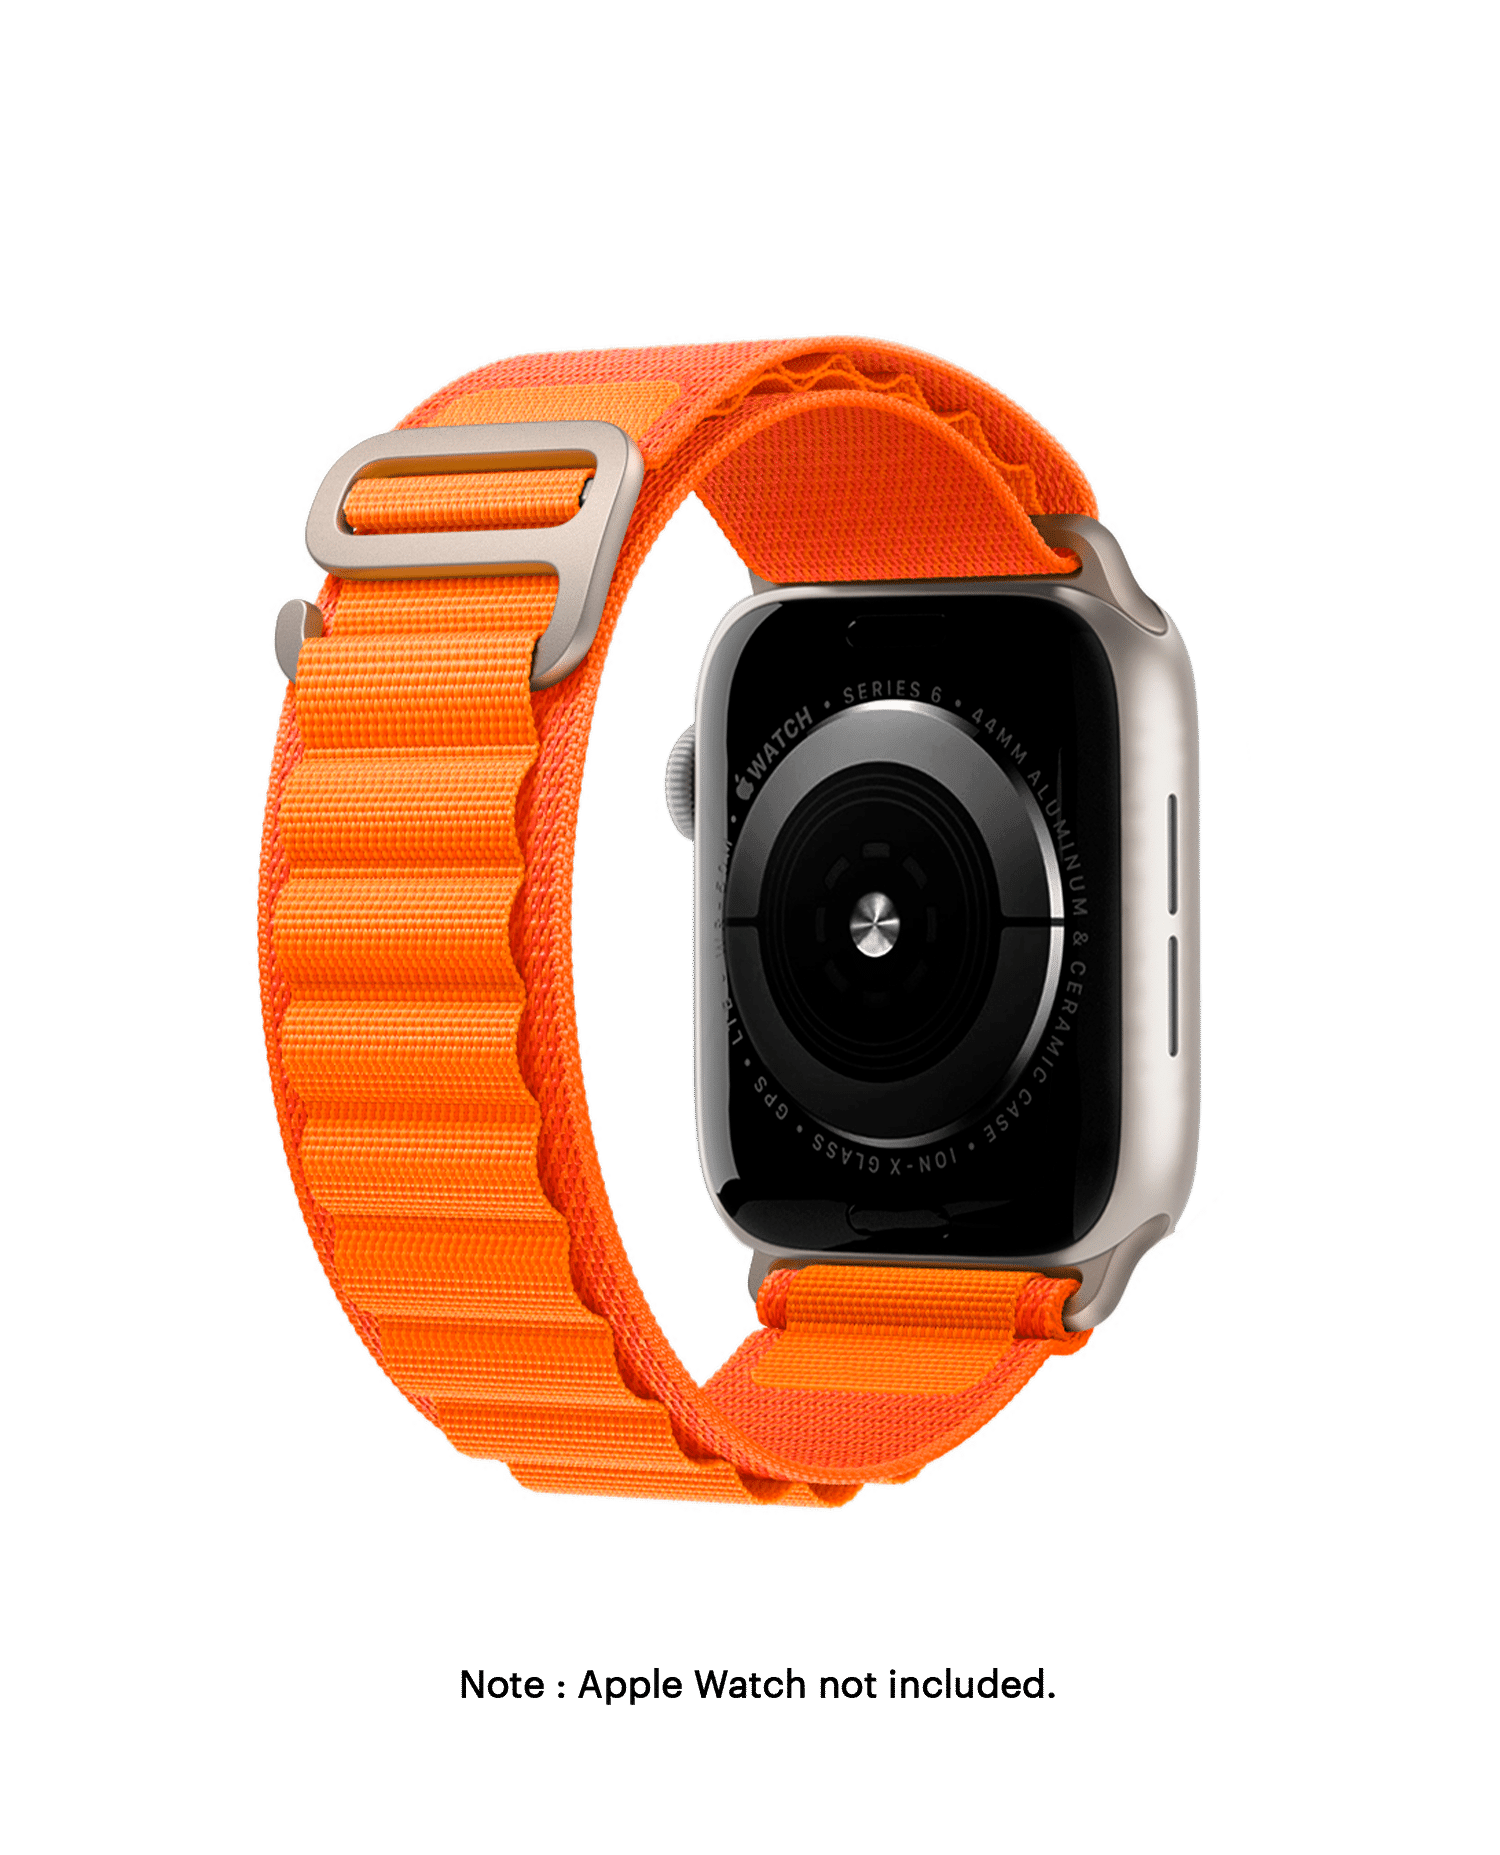 Double Loop Apple Watch Band - Bright Orange